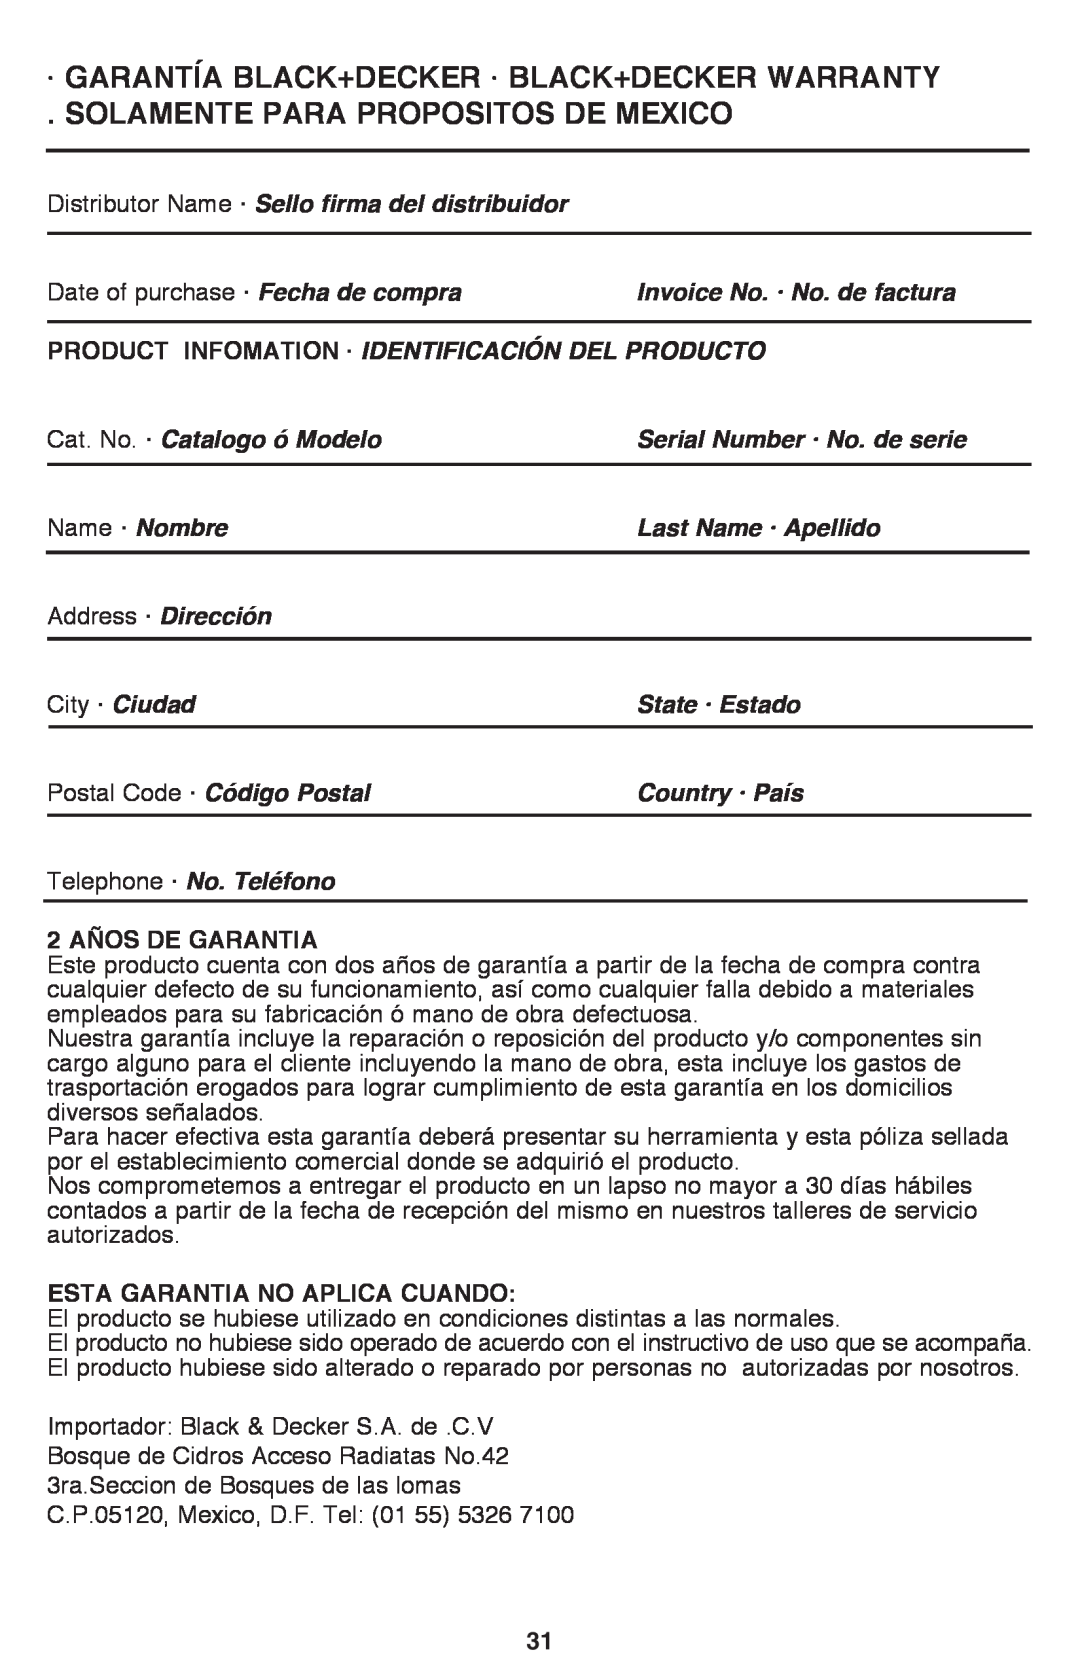 Black & Decker CS1015 · Garantía Black+Decker · Black+Decker Warranty, Solamente Para Propositos De Mexico 